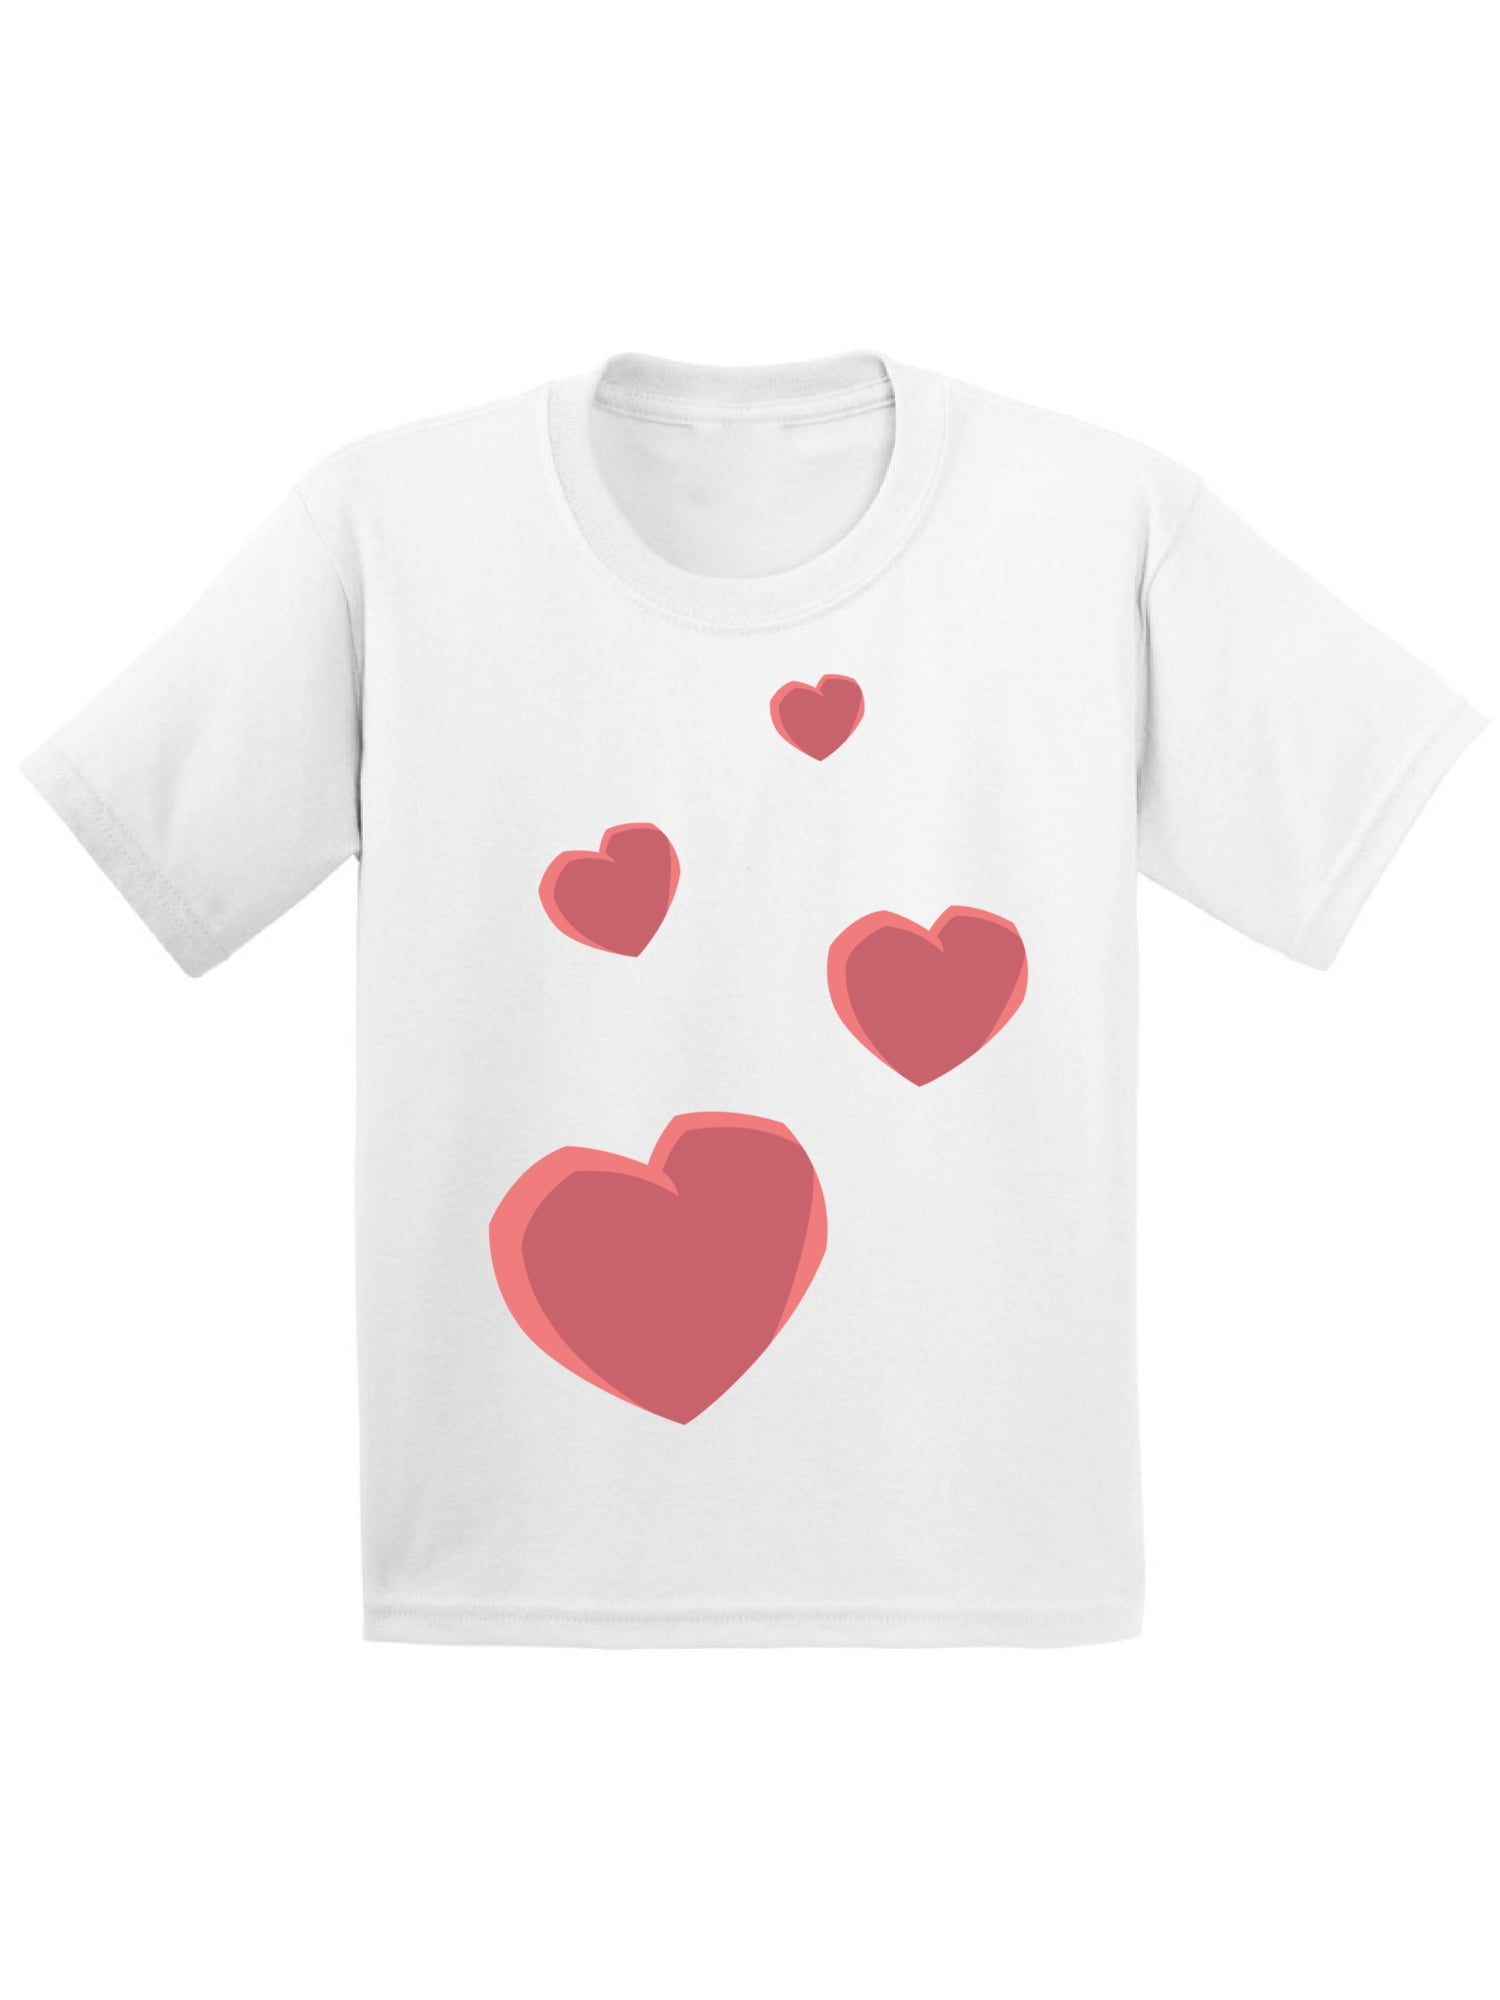 Red Heart Shirt Youth Valentine Shirt Nacho Valentine Valentine Outfit Girl Valentine's Day Shirt Funny Valentine Shirt Girl Clothing